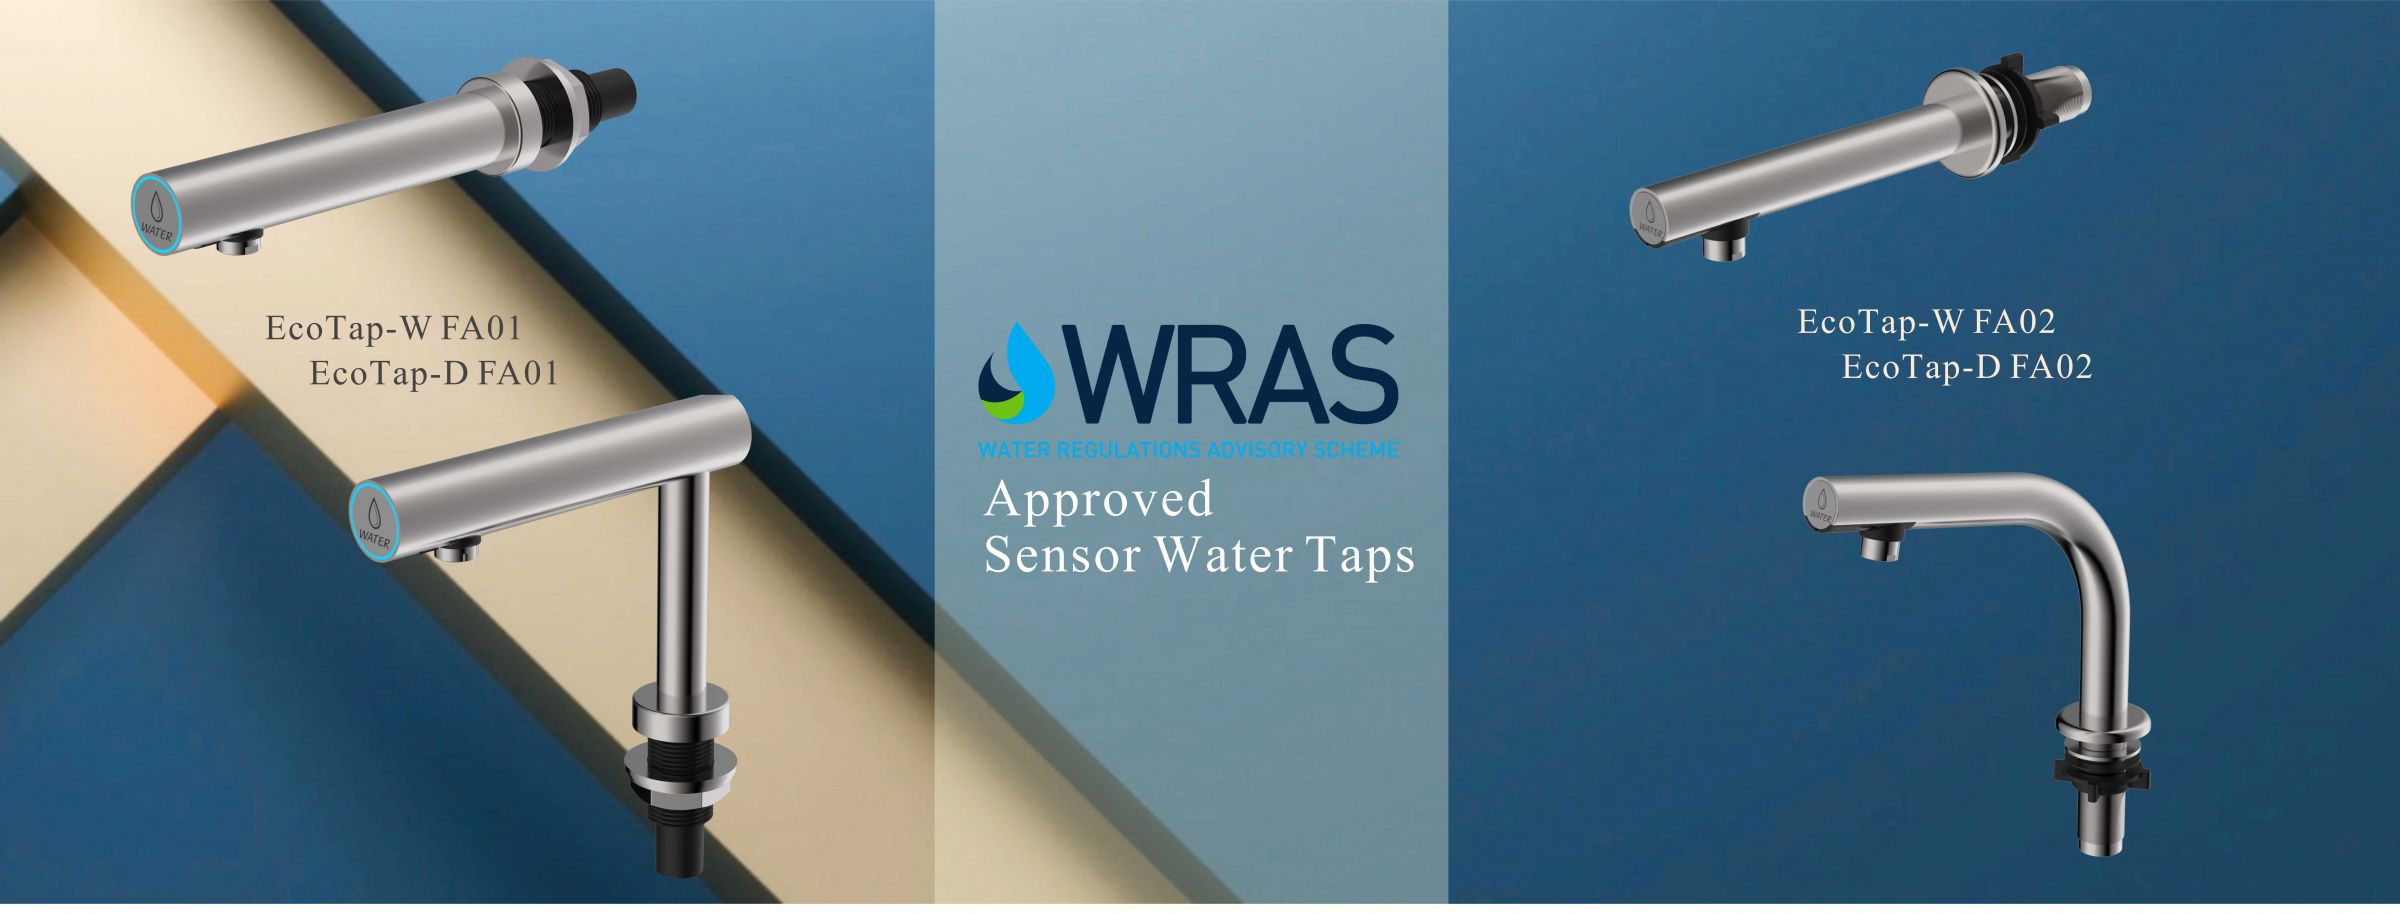 WRAS承認の自動蛇口